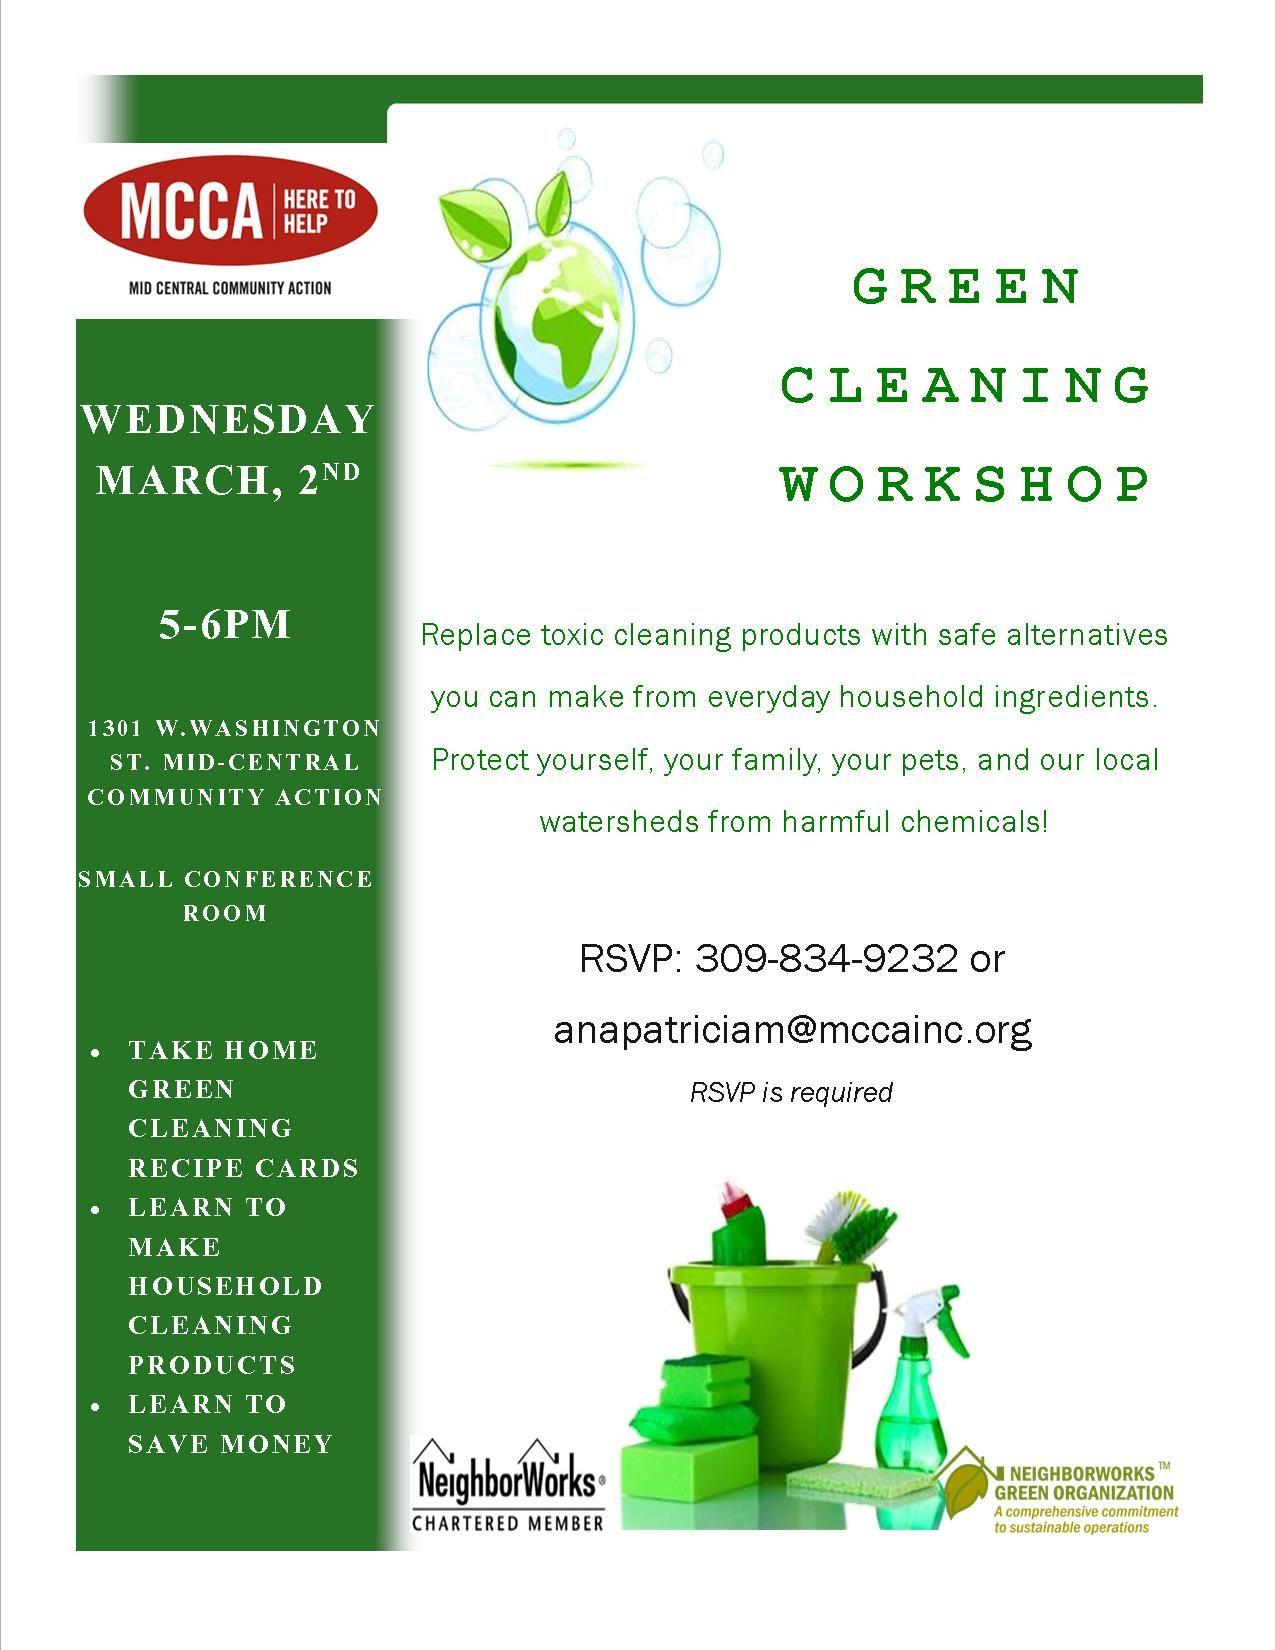 NeighborWorks Green Organization Logo - Green Cleaning Workshop – Ecology Action Center